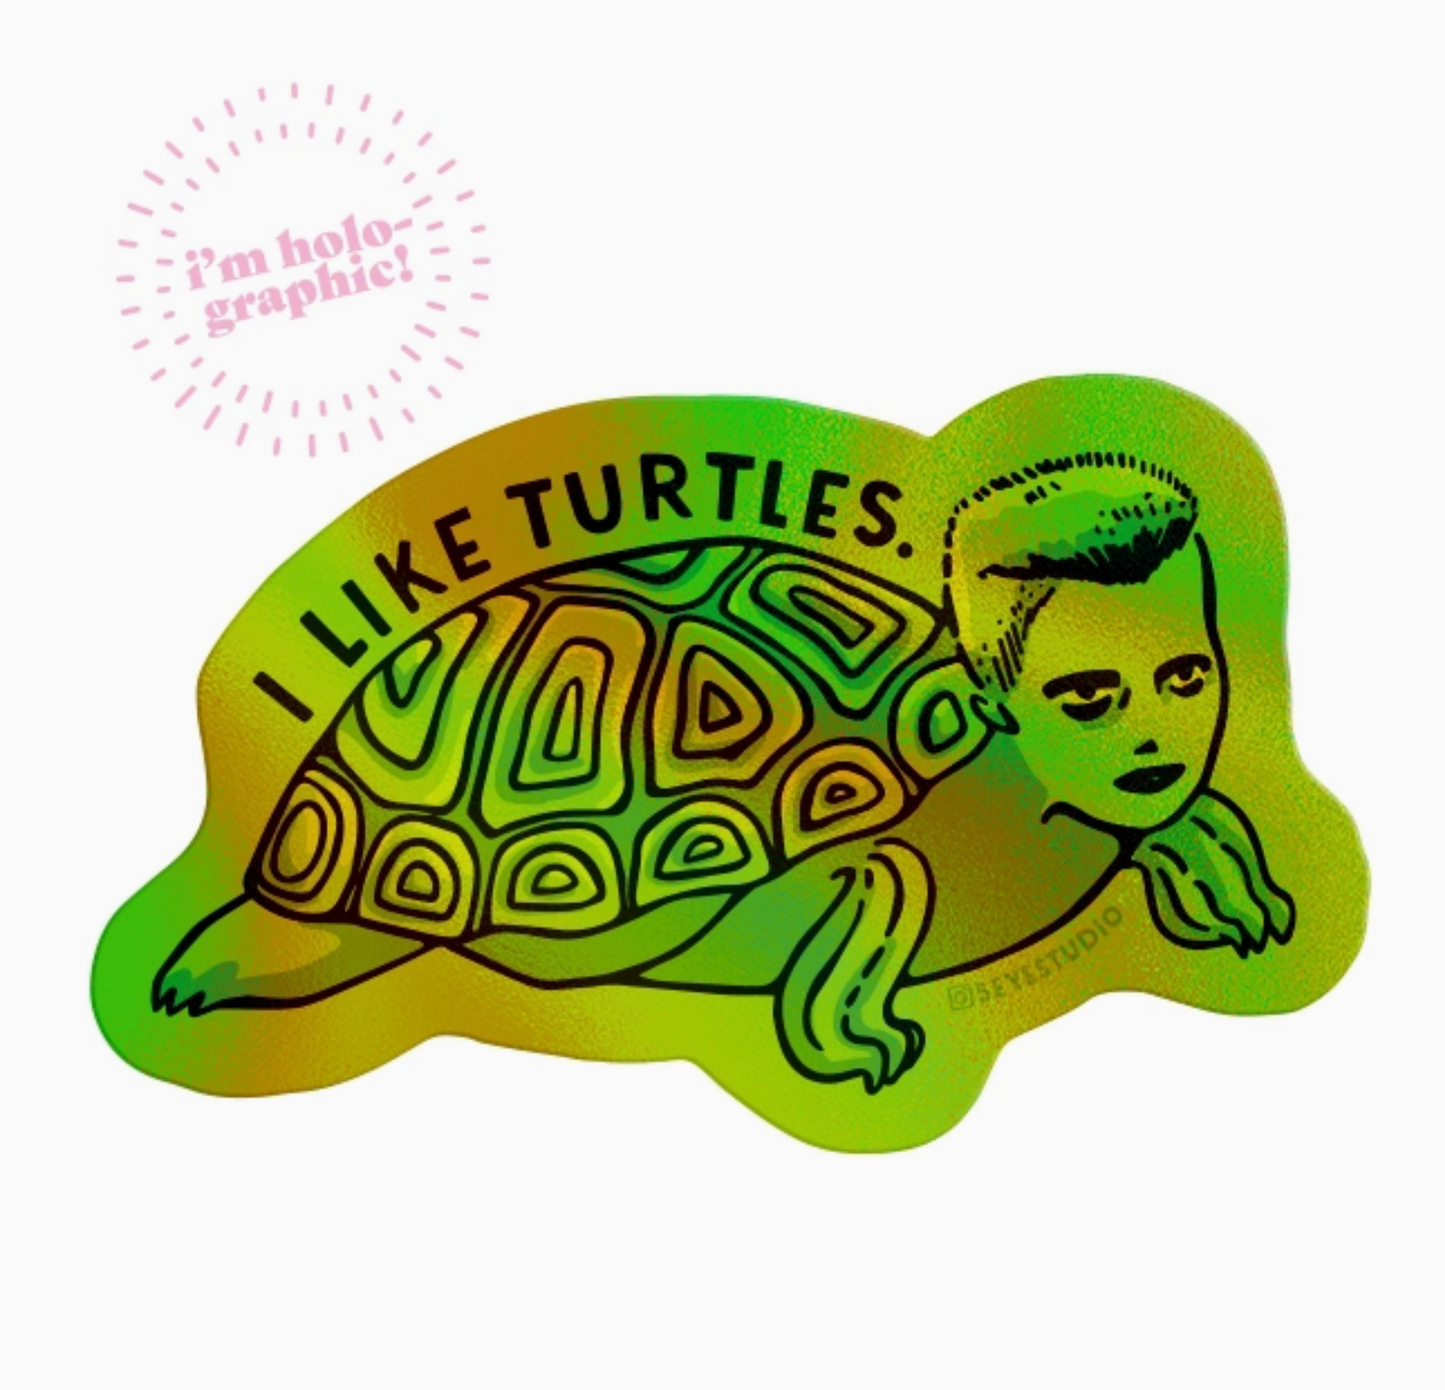 I Like Turtles Holographic Sticker